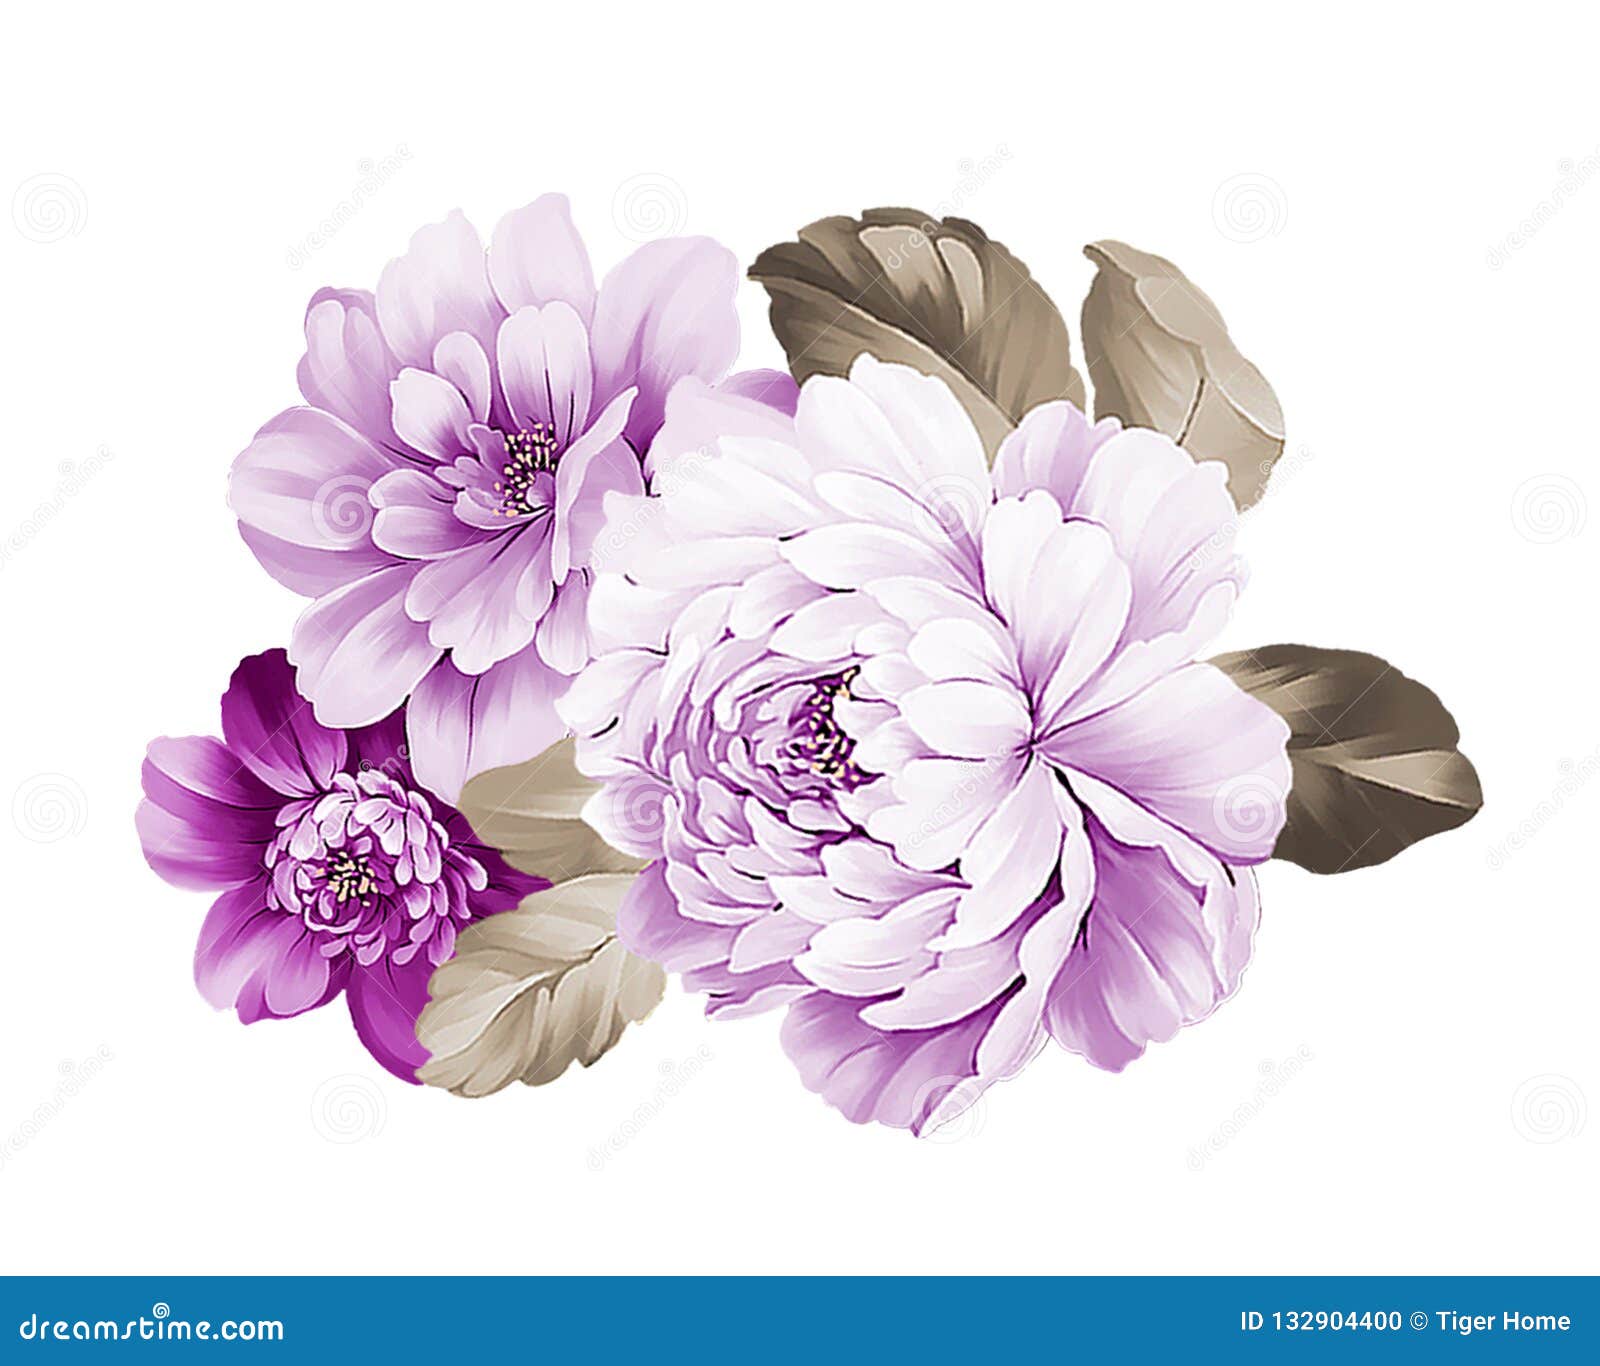 Flower Illustration Pattern in Simple Background Stock Illustration